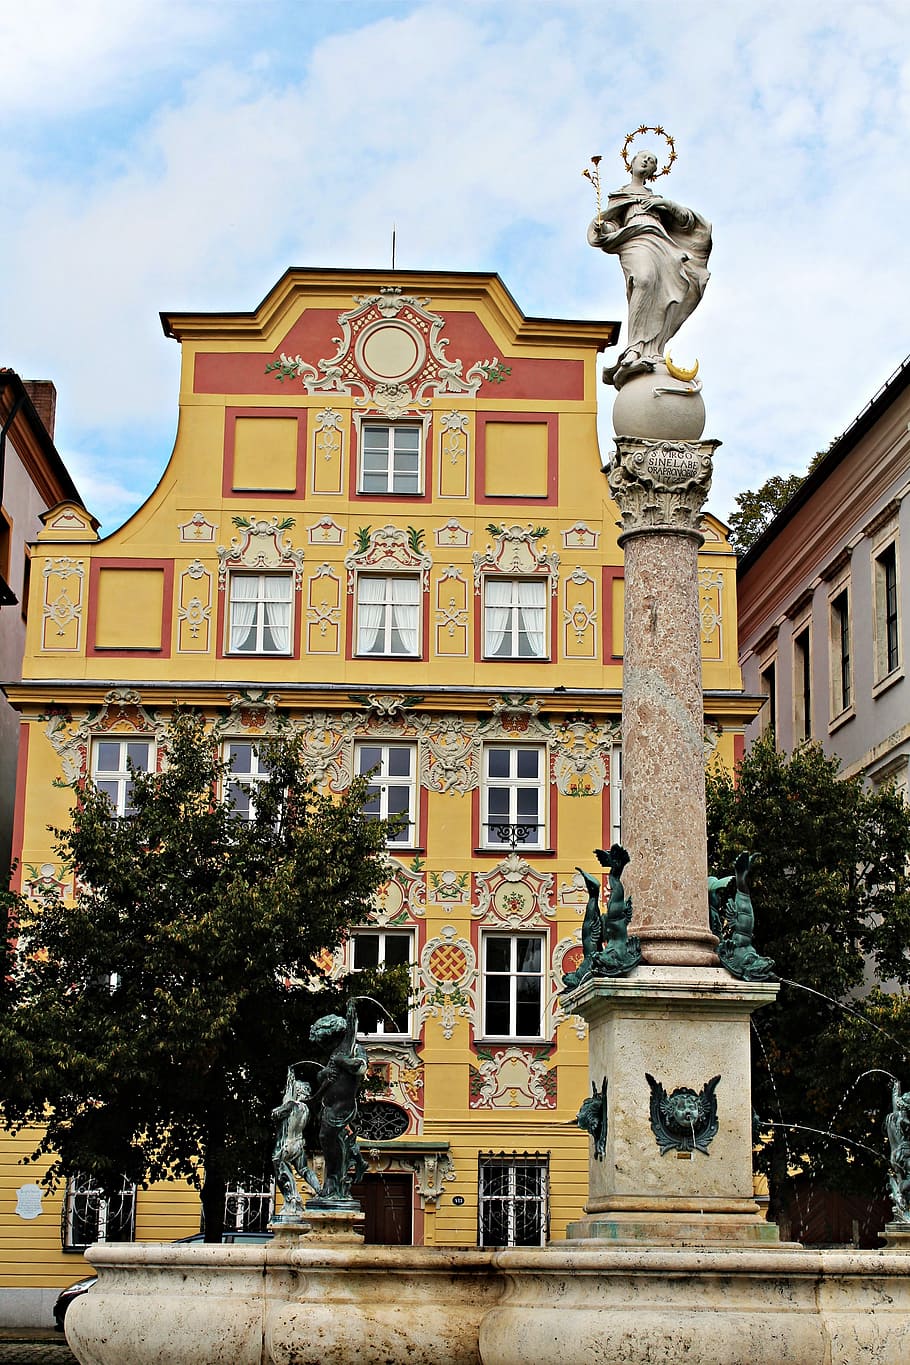 Stucco, Façade, Fountain, Marketplace, stucco façade, old town